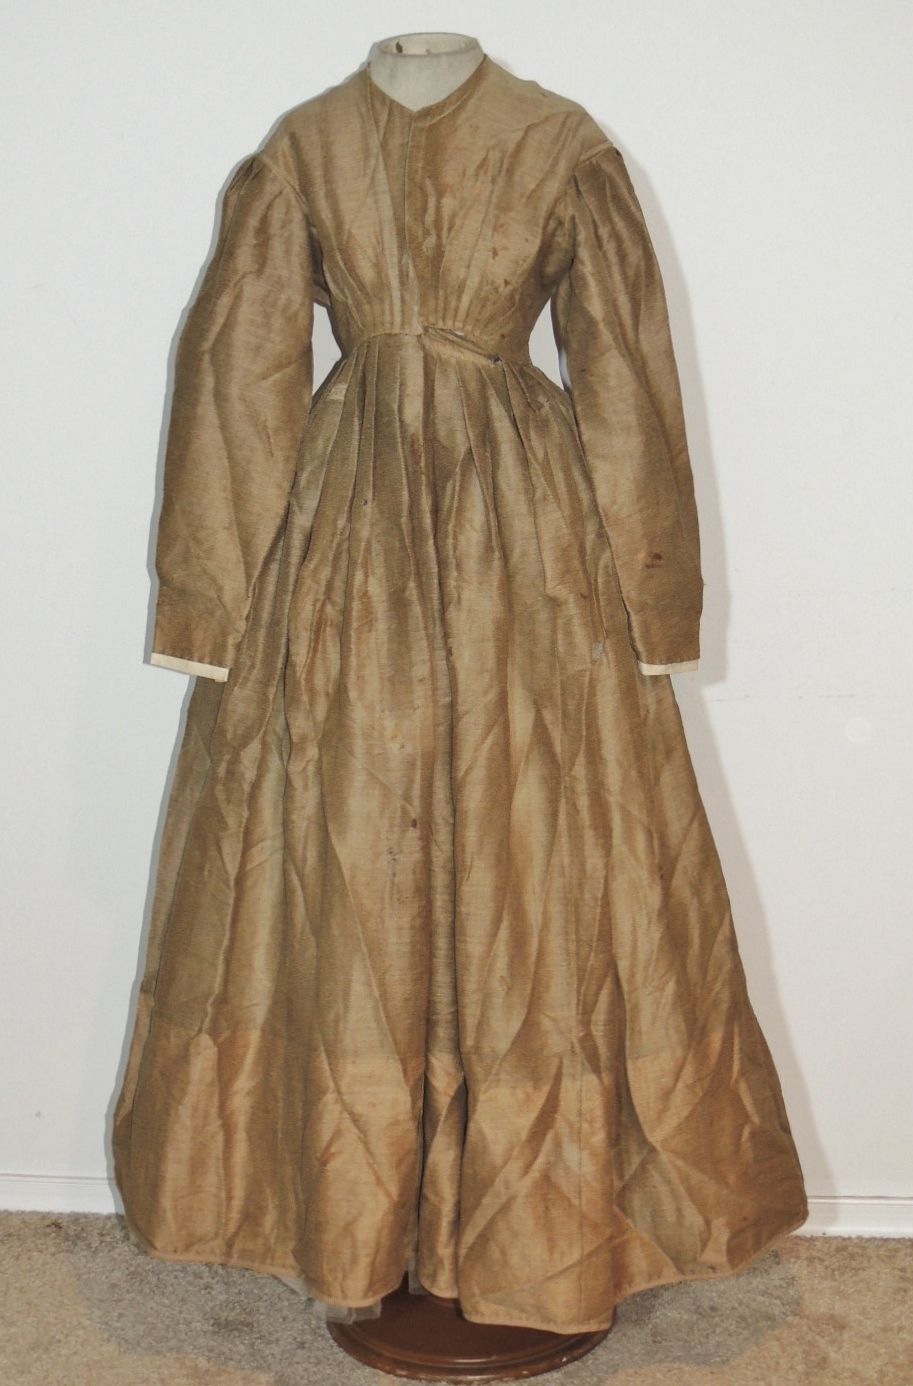 All The Pretty Dresses: Maternity Early 1860's American Civil War Era Dress